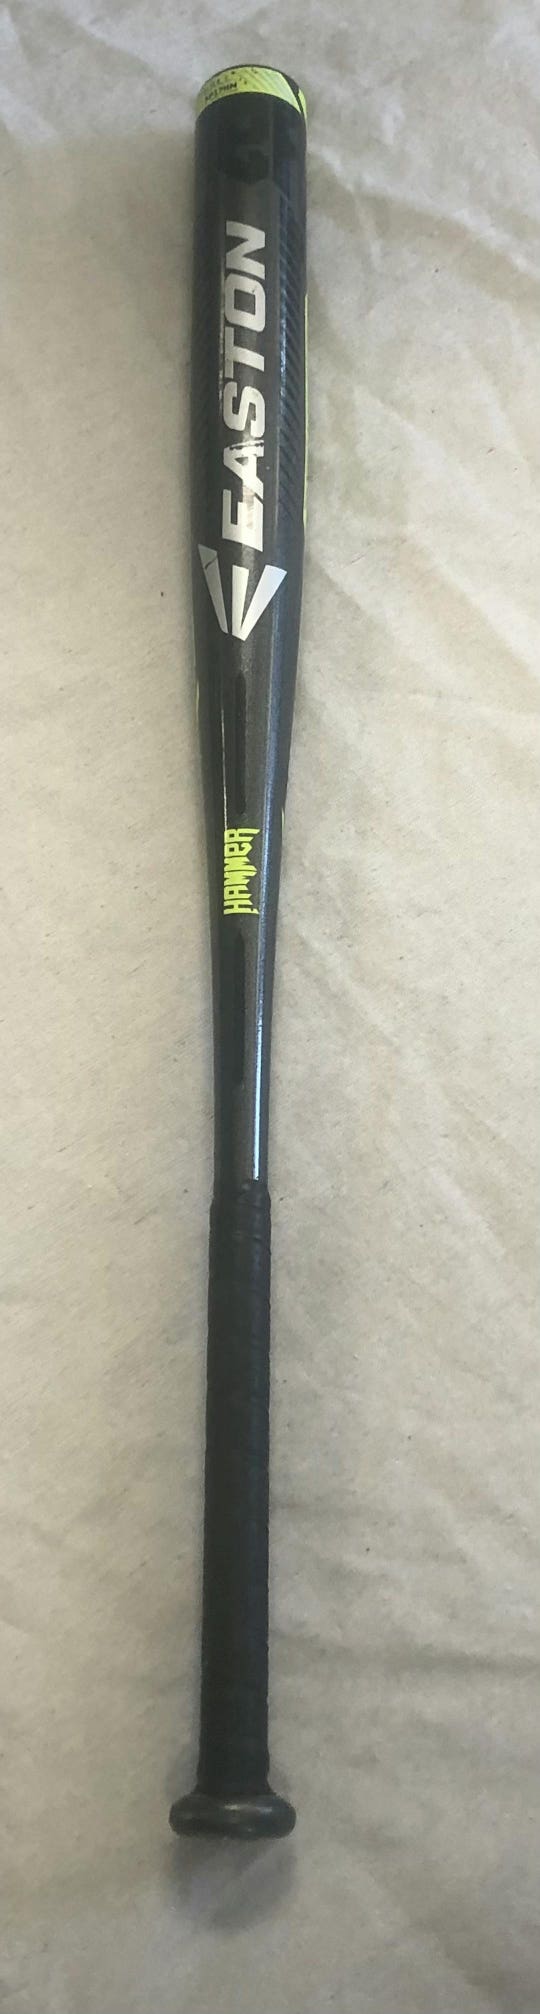 Used Easton Hammer Sp17hm 33" -7 Drop Slowpitch Bats